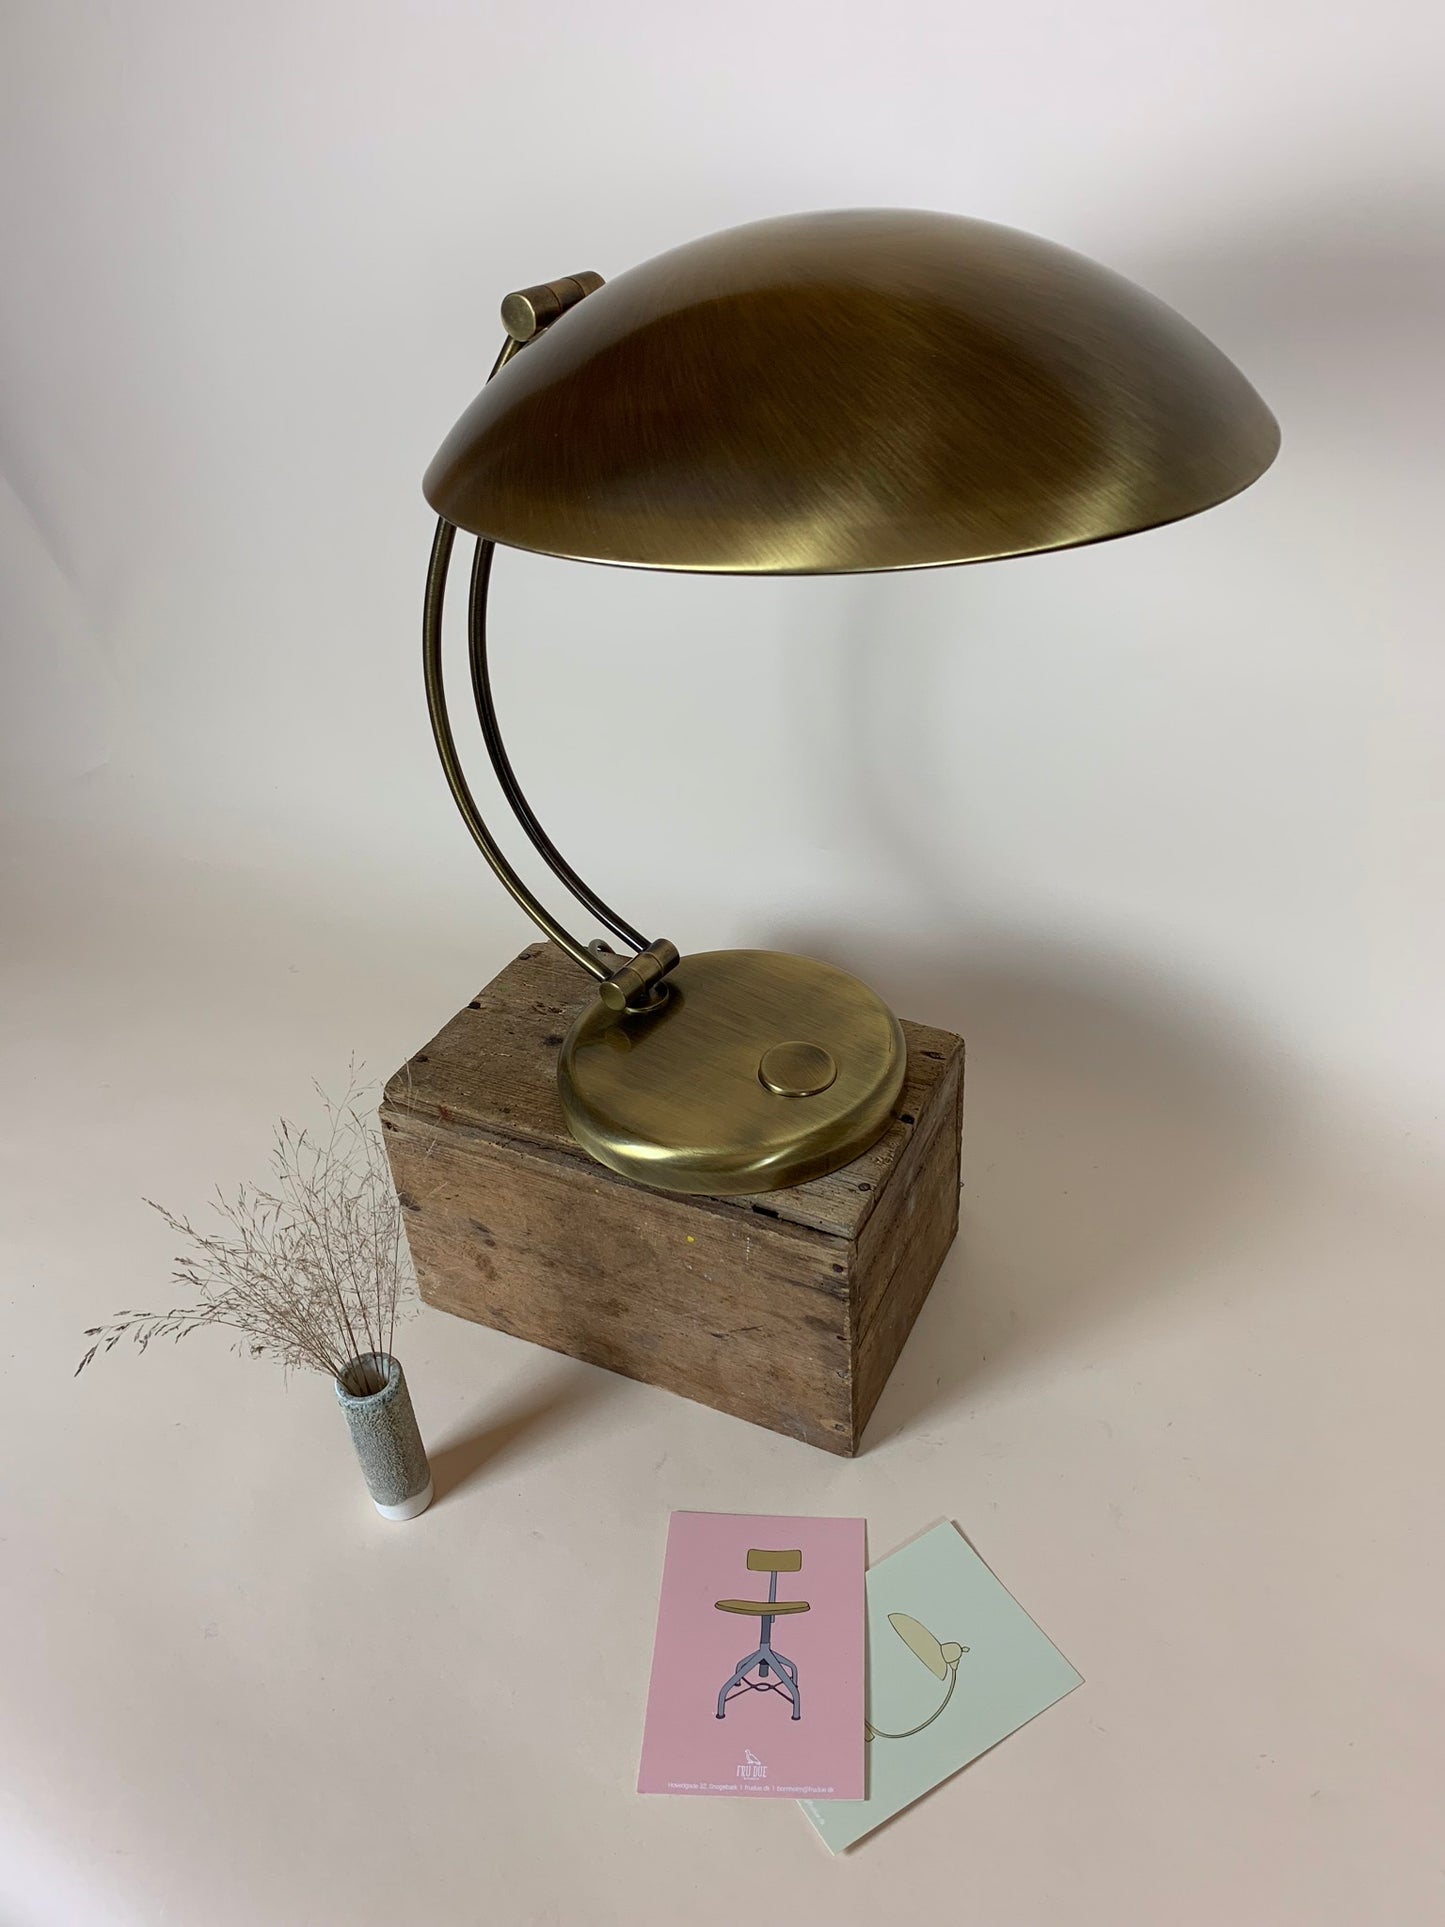 Hillebrandlampe um 1950 - Seltenes Exemplar